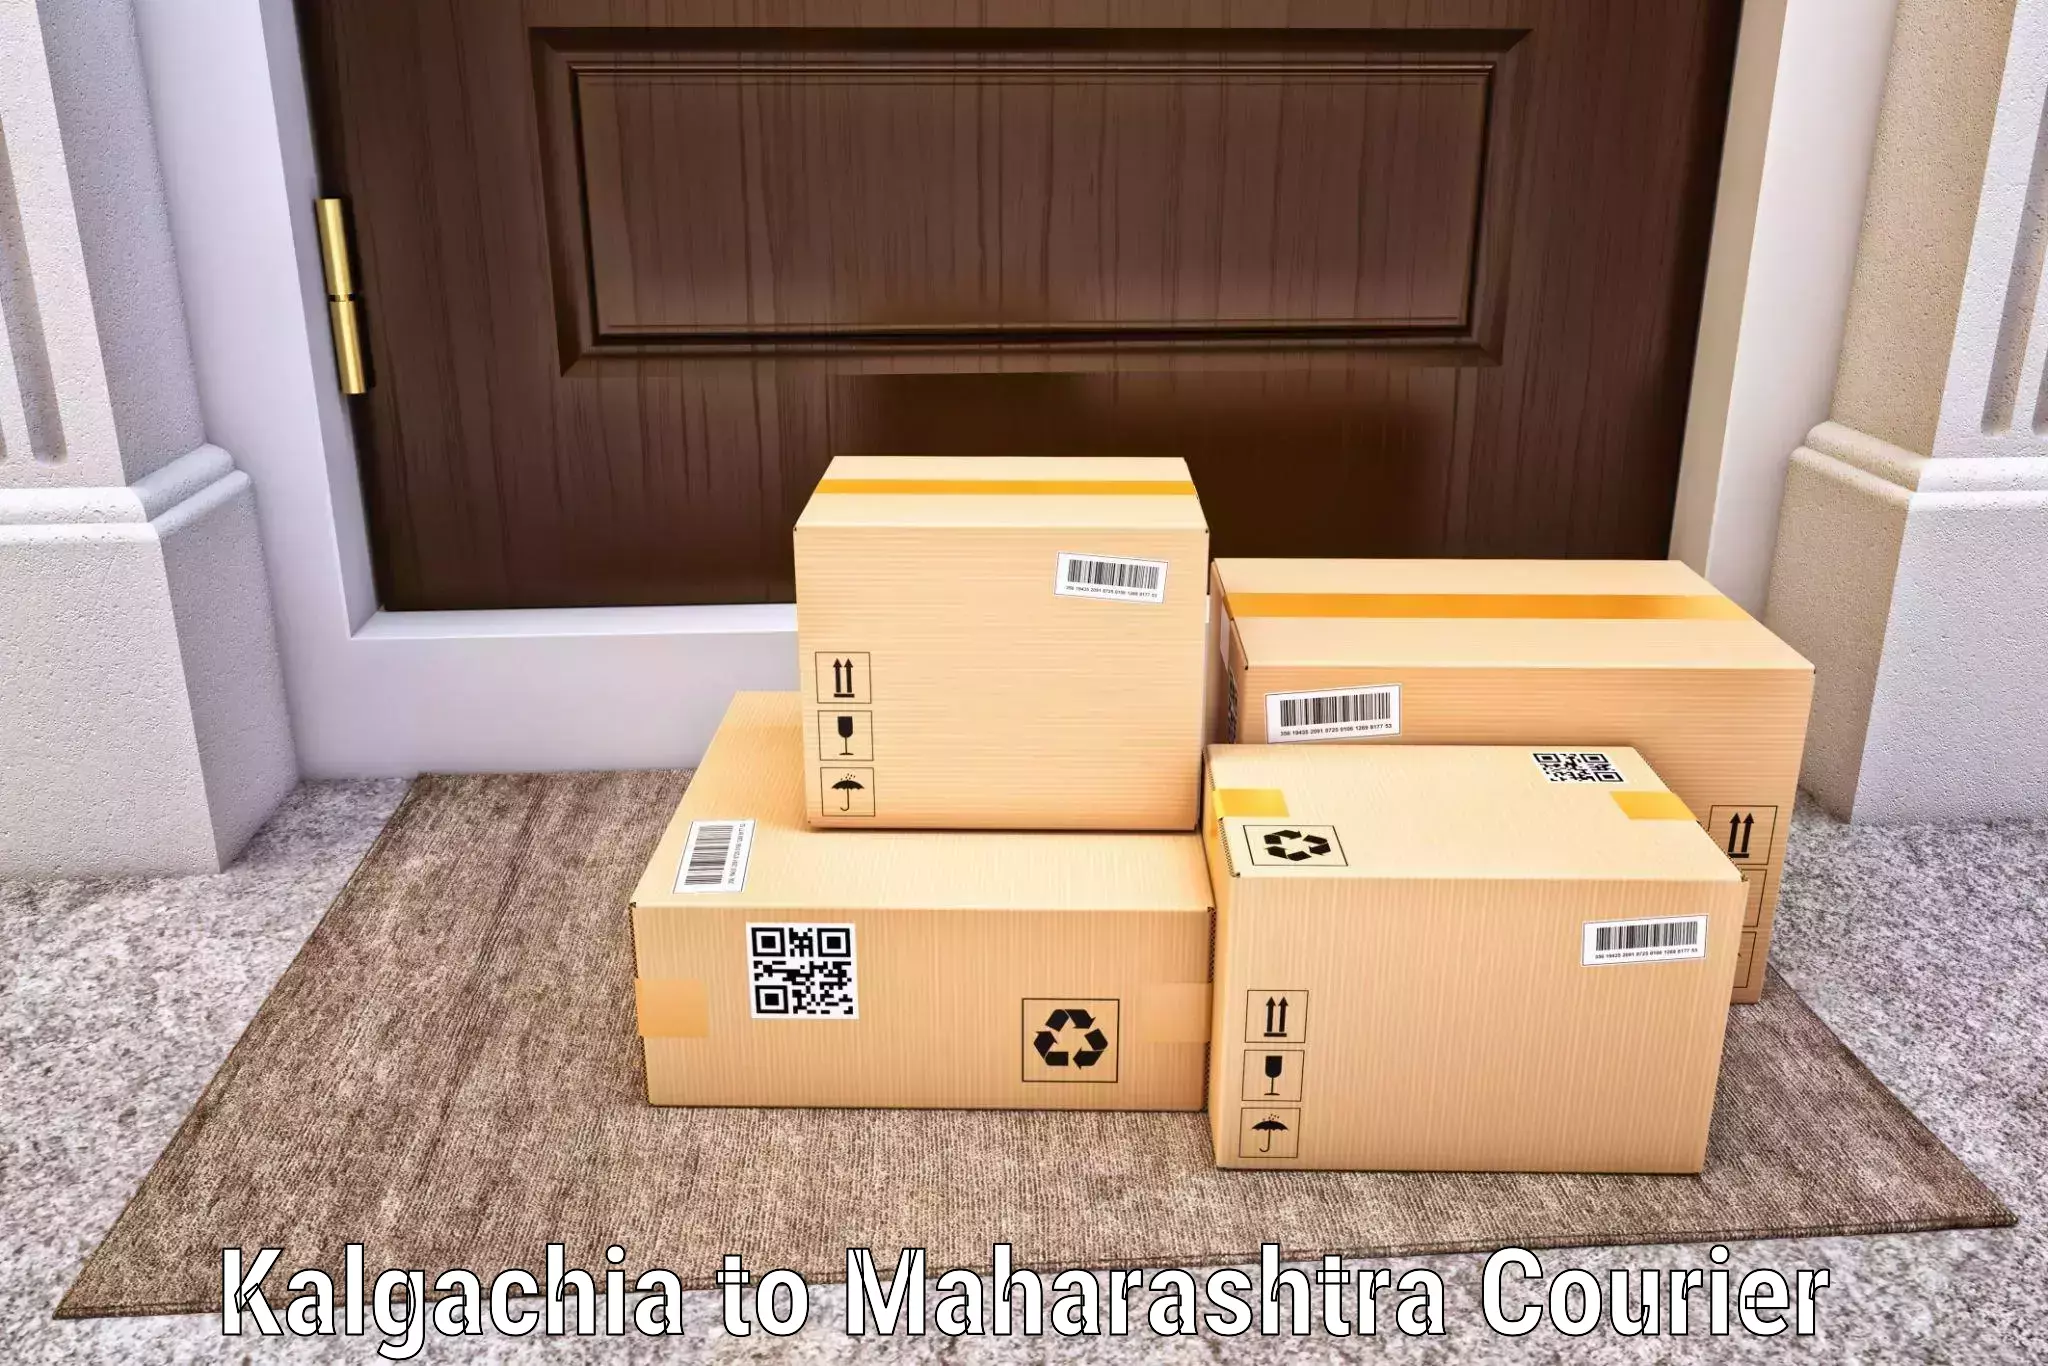 Same-day delivery solutions in Kalgachia to Maharashtra